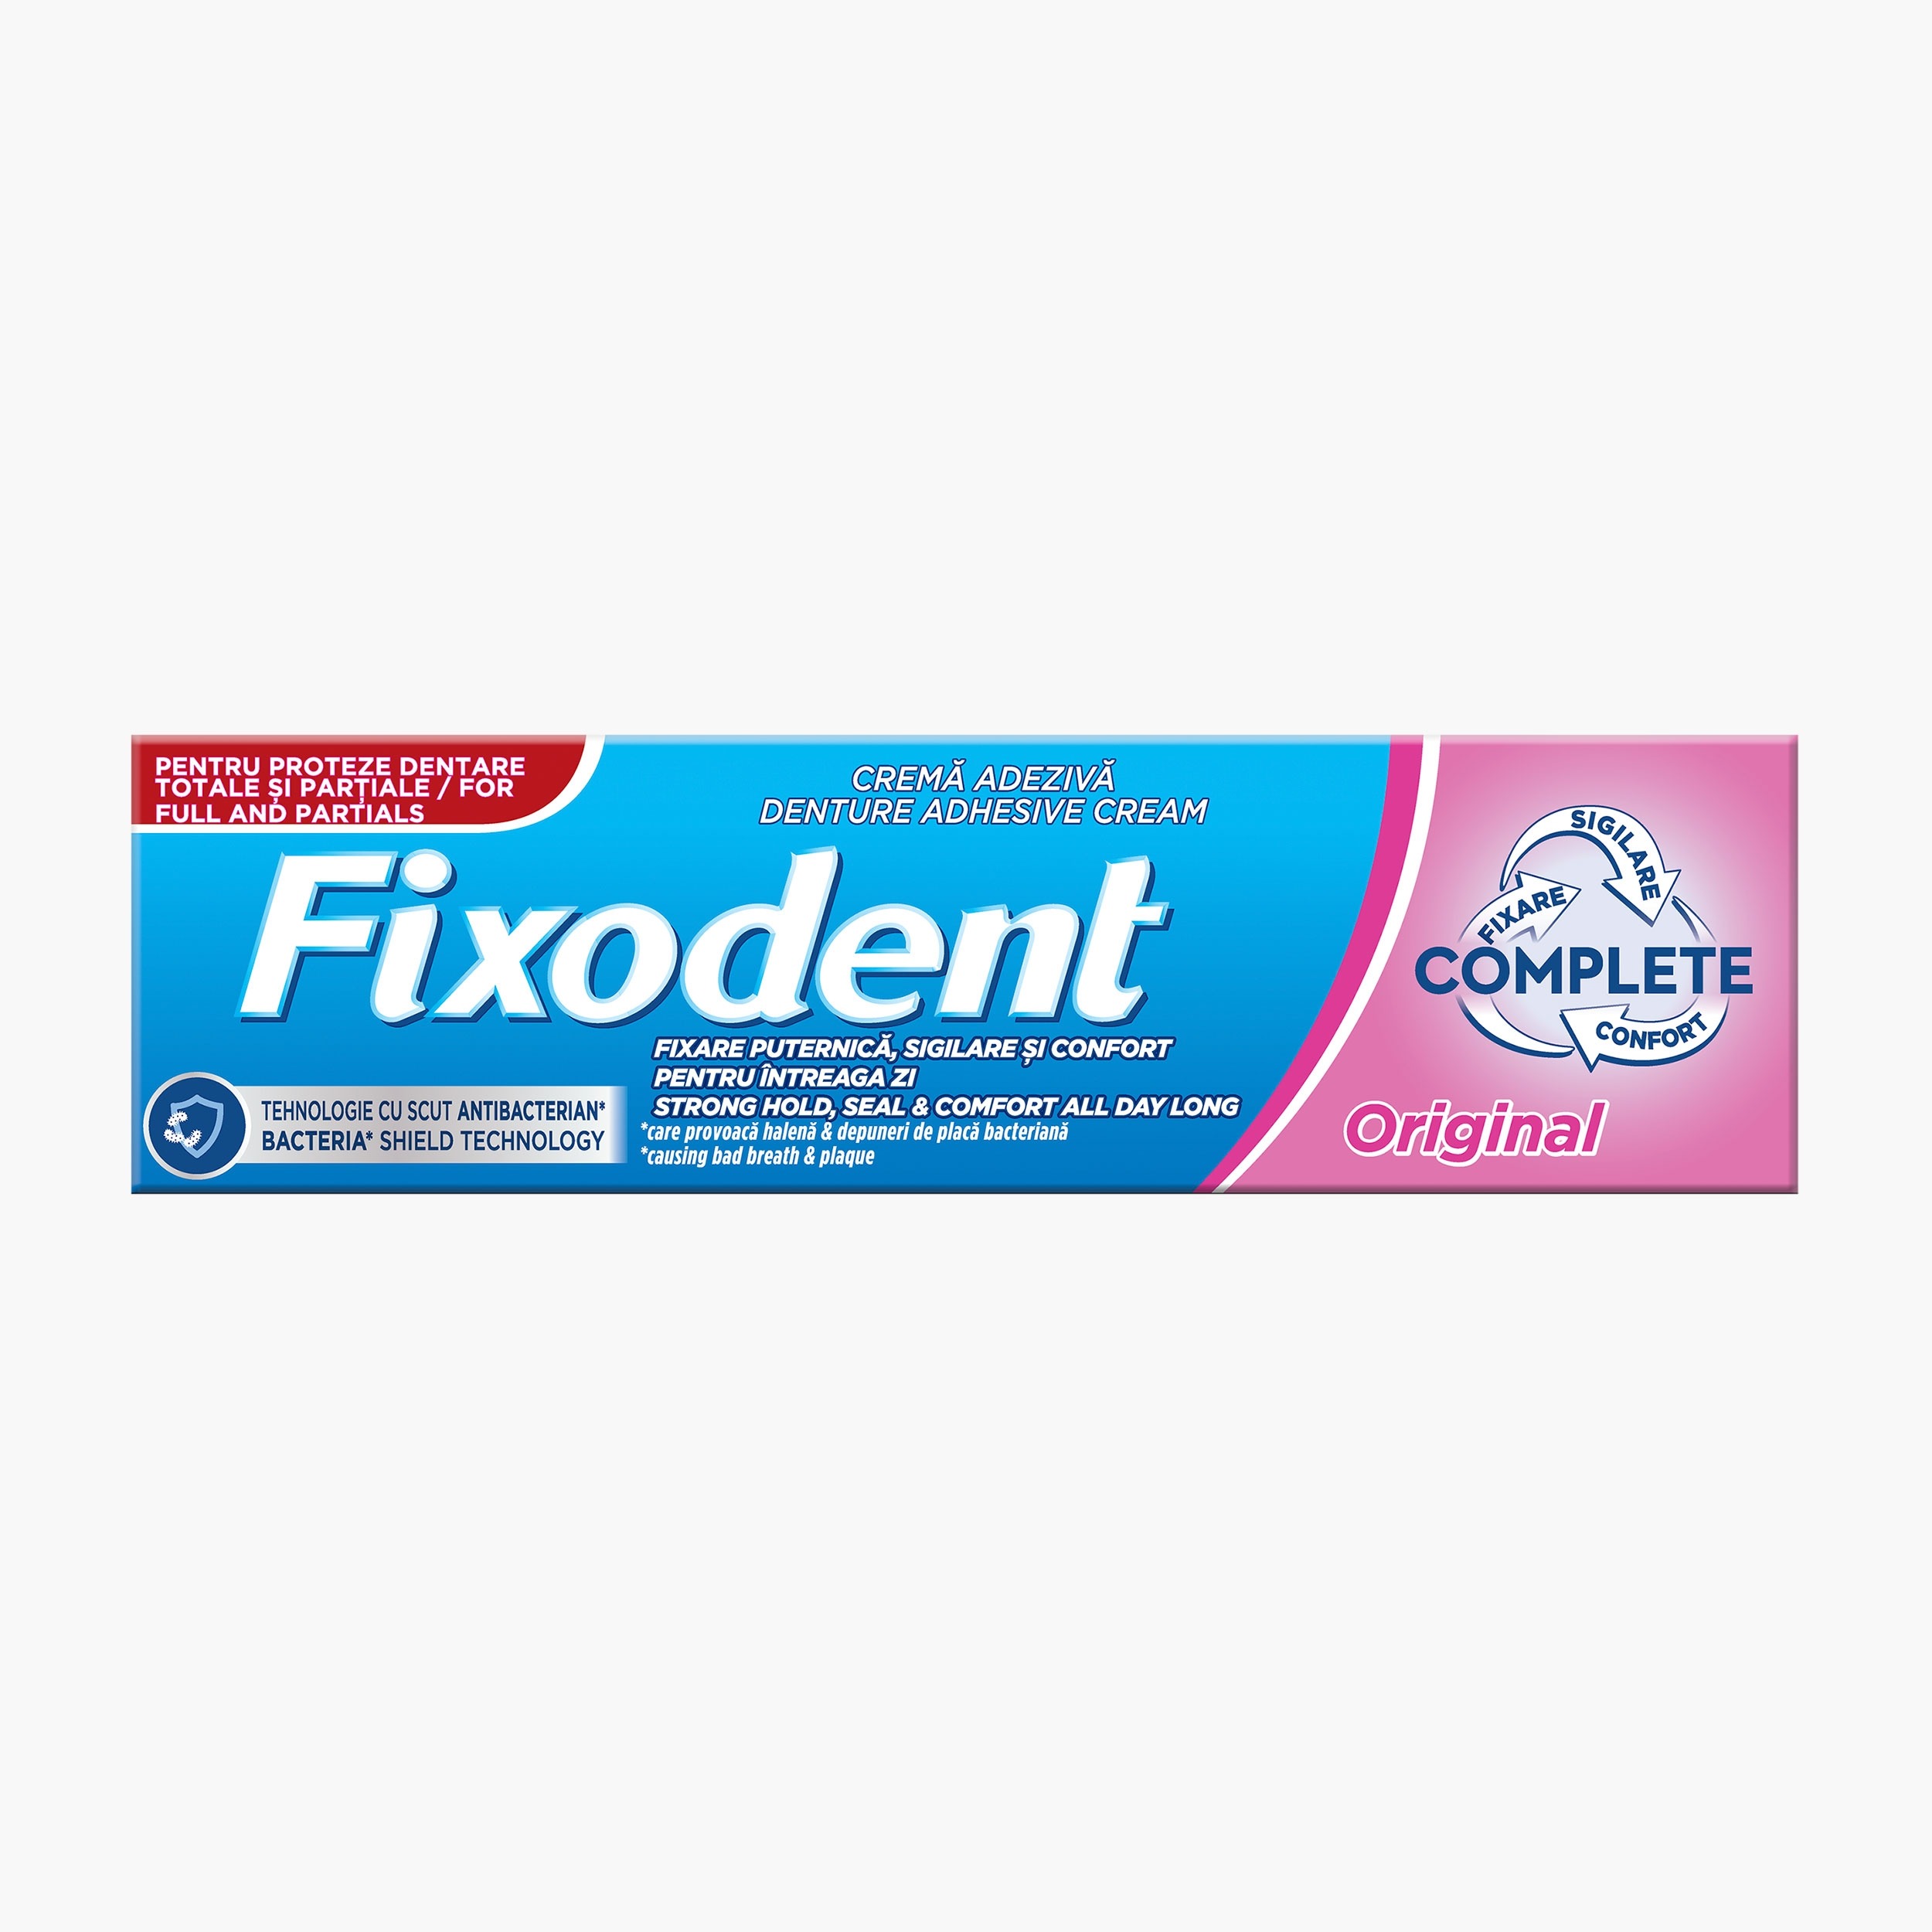 Alte produse igiena dentara - FIXODENT CREMA ADEZIVA PROTEZE DENTARE ORIGINAL 47GR 12/BAX, lucidiusmarket.ro